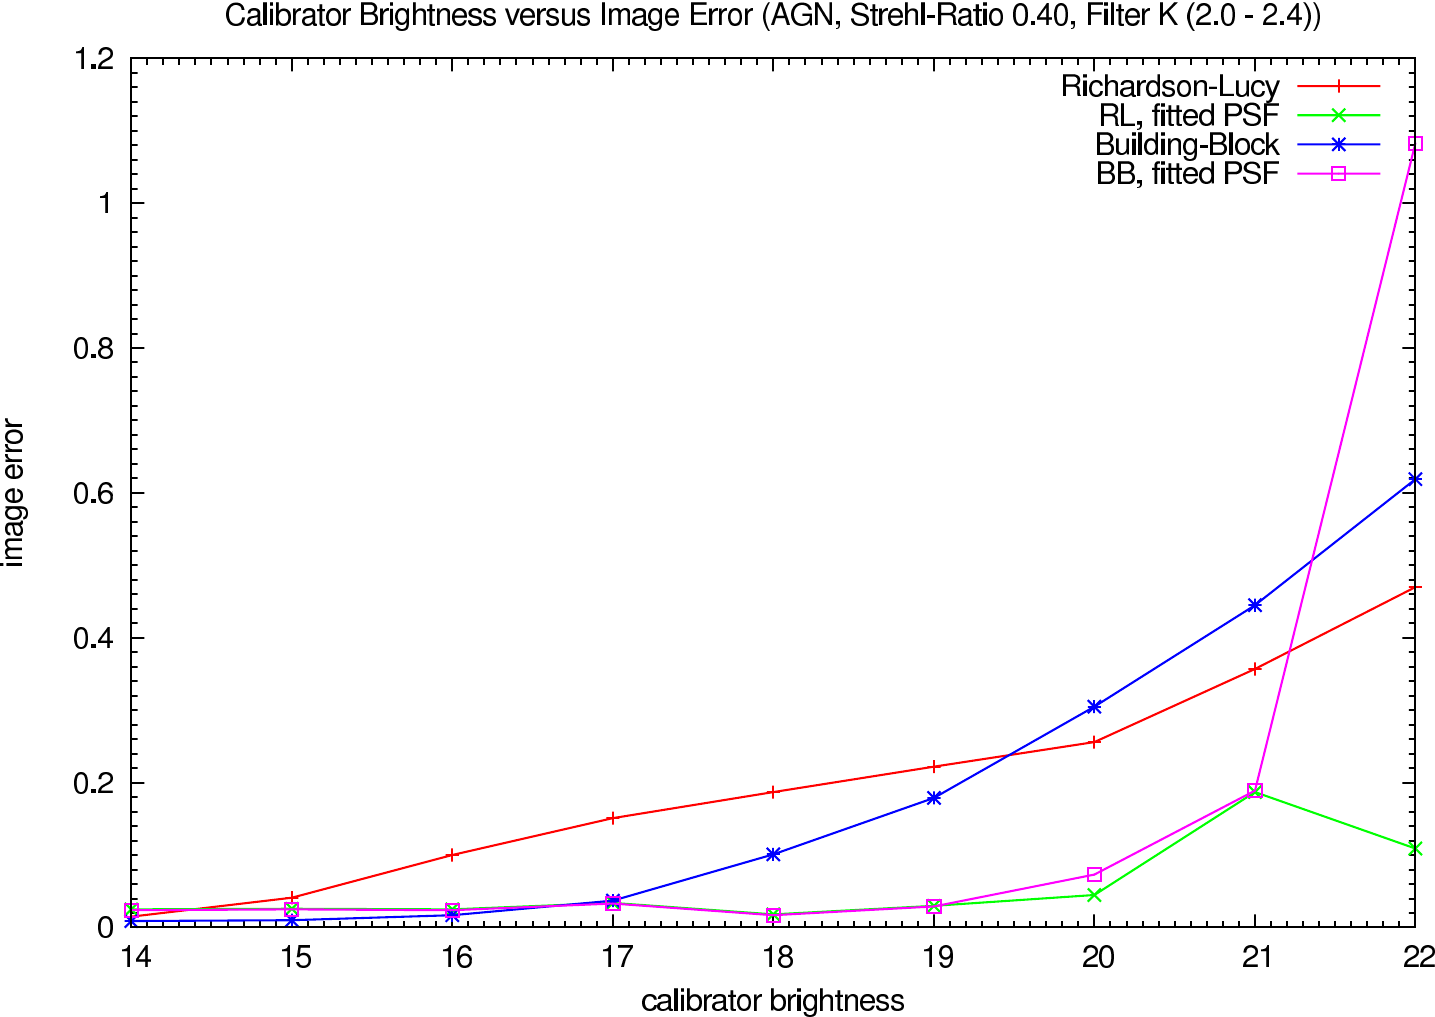 Image errors depending on the calibrator brightness, strehl ratio 0.40, K-Band